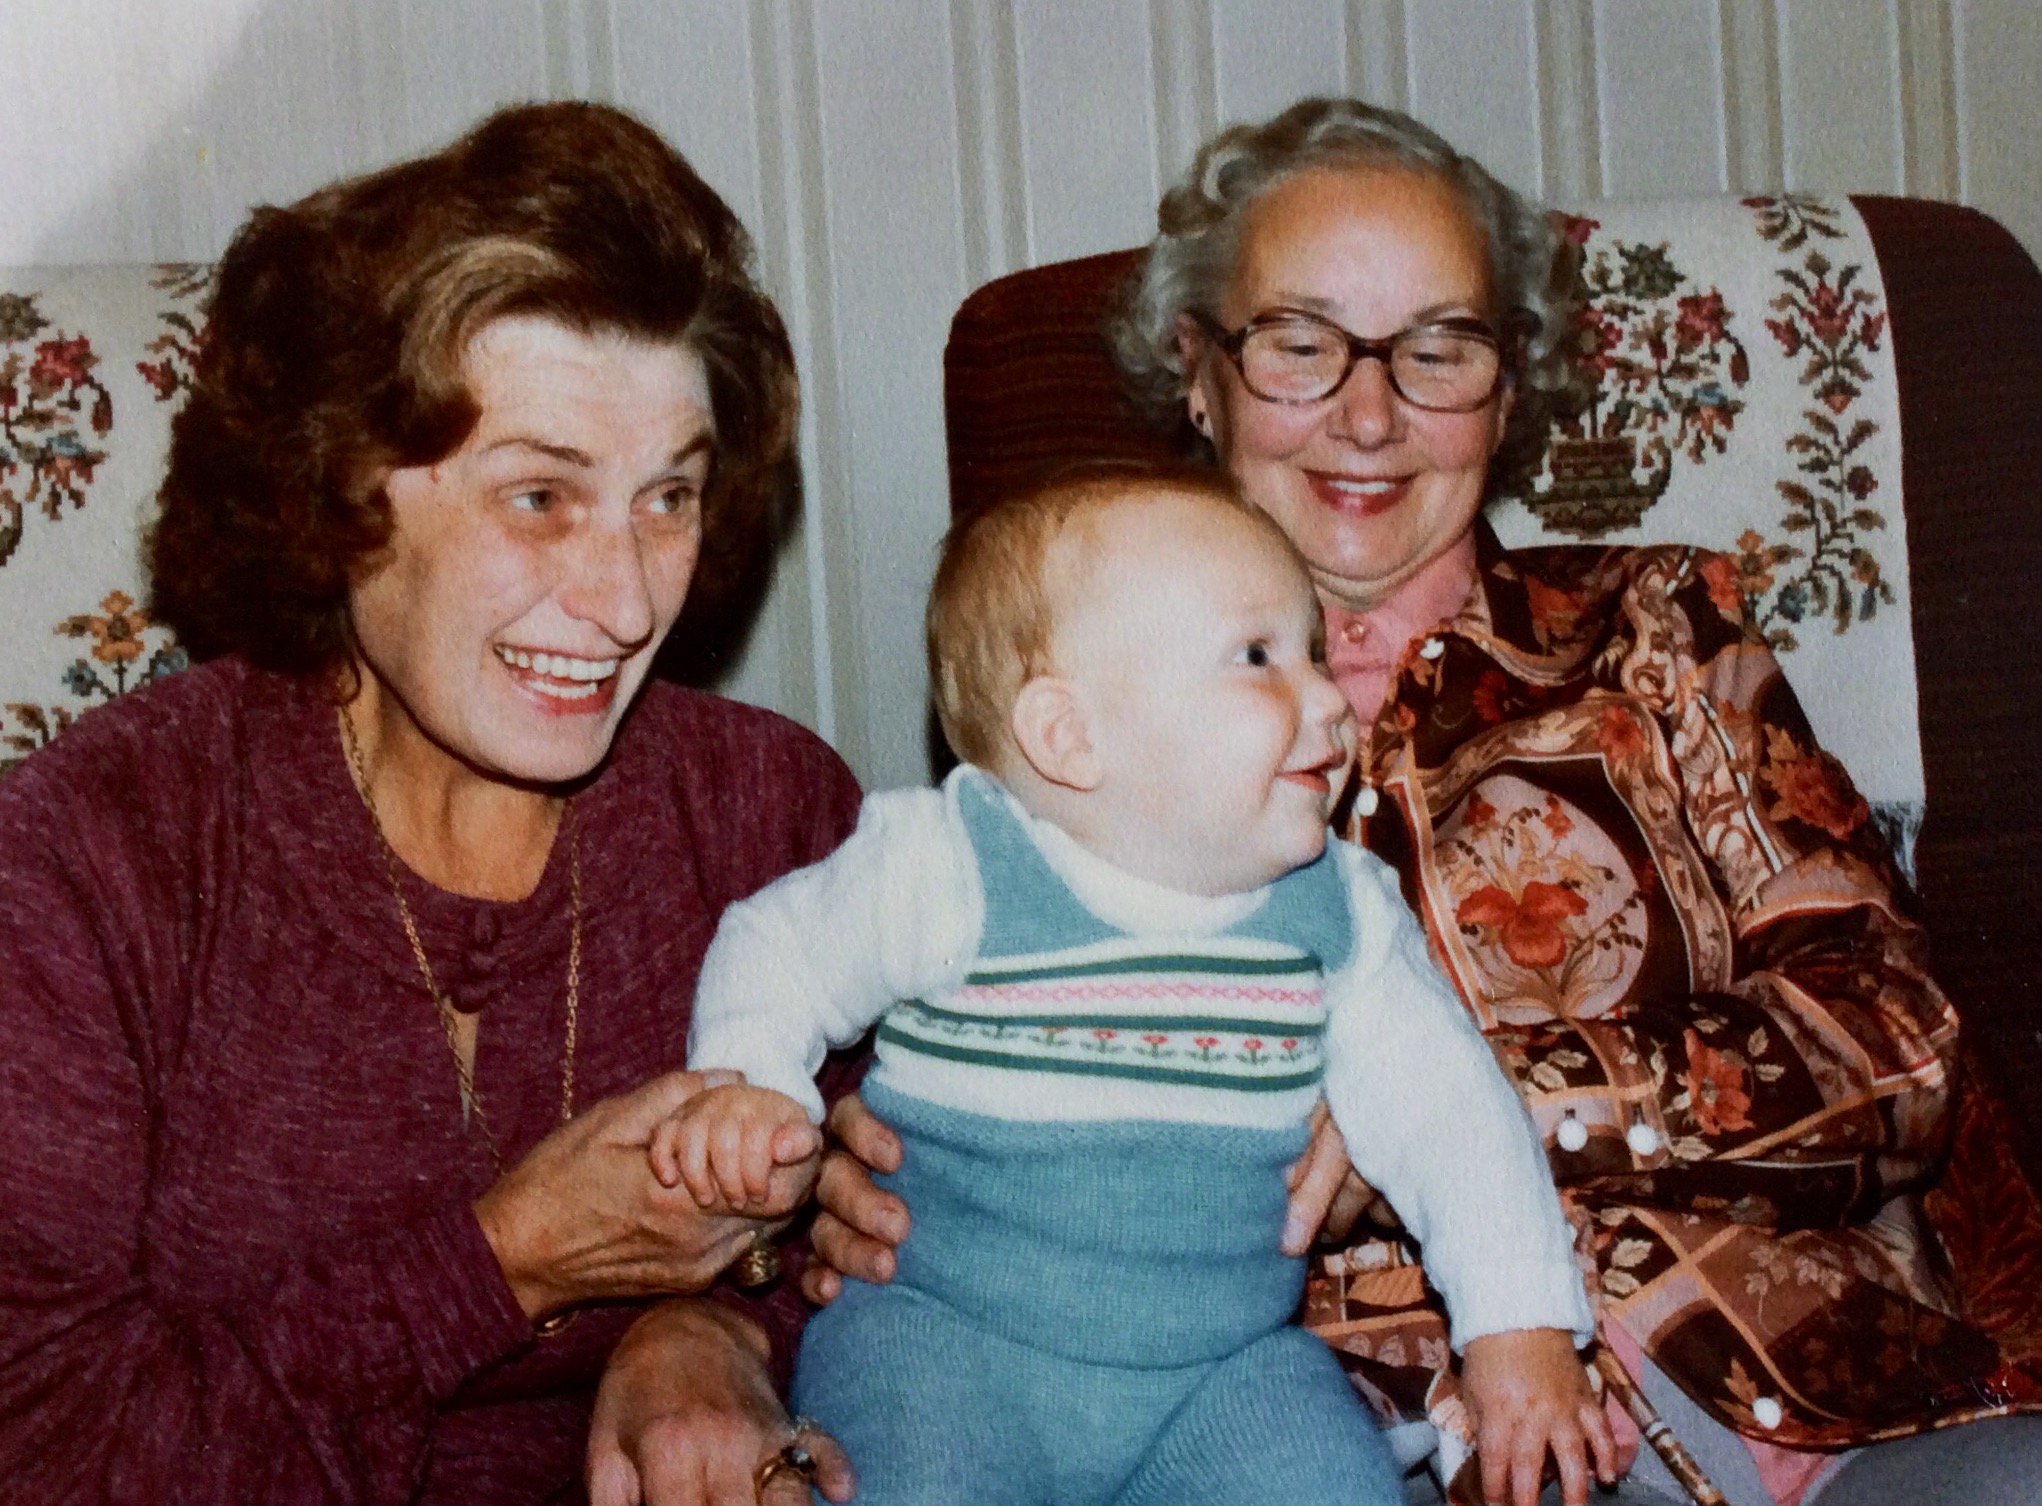 JET with Nans 1979

